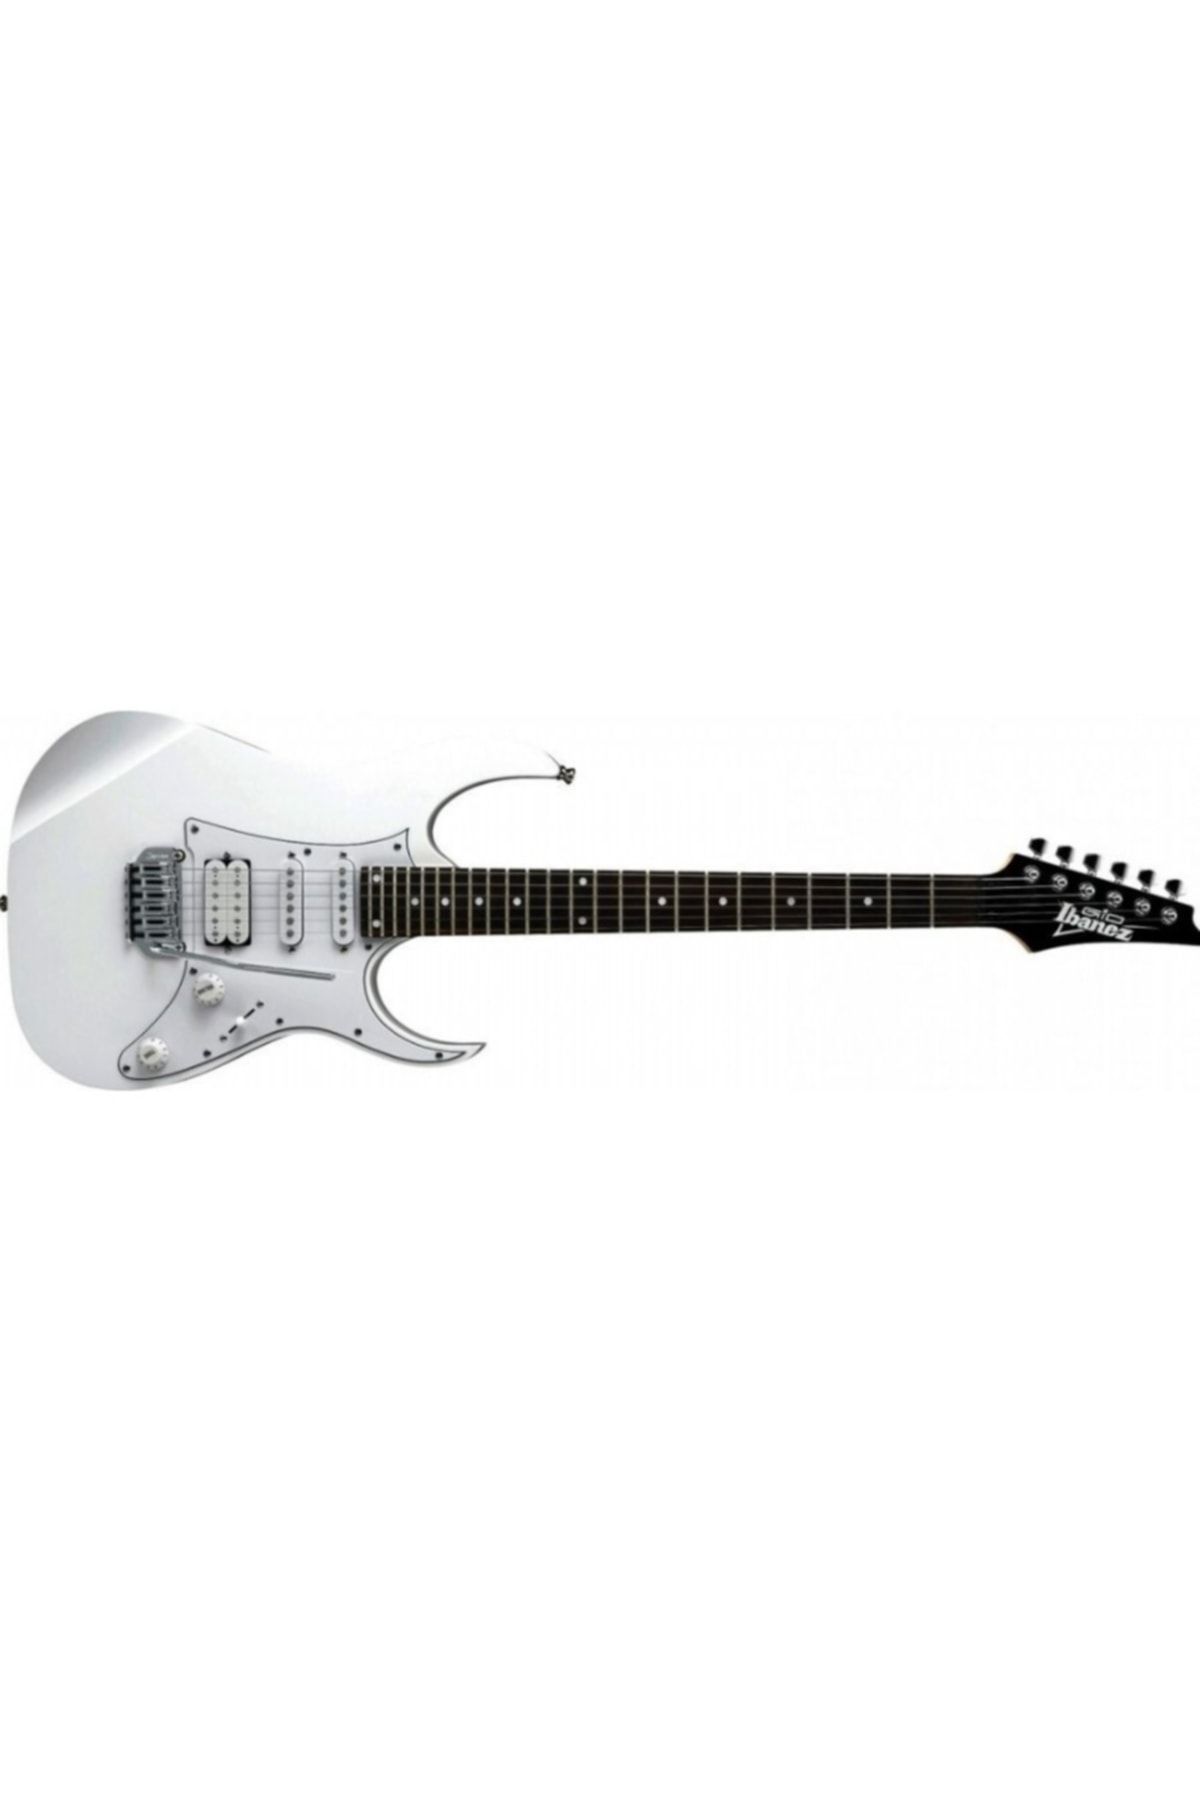 Ibanez Grg140-wh Gio Serisi Beyaz Elektro Gitar